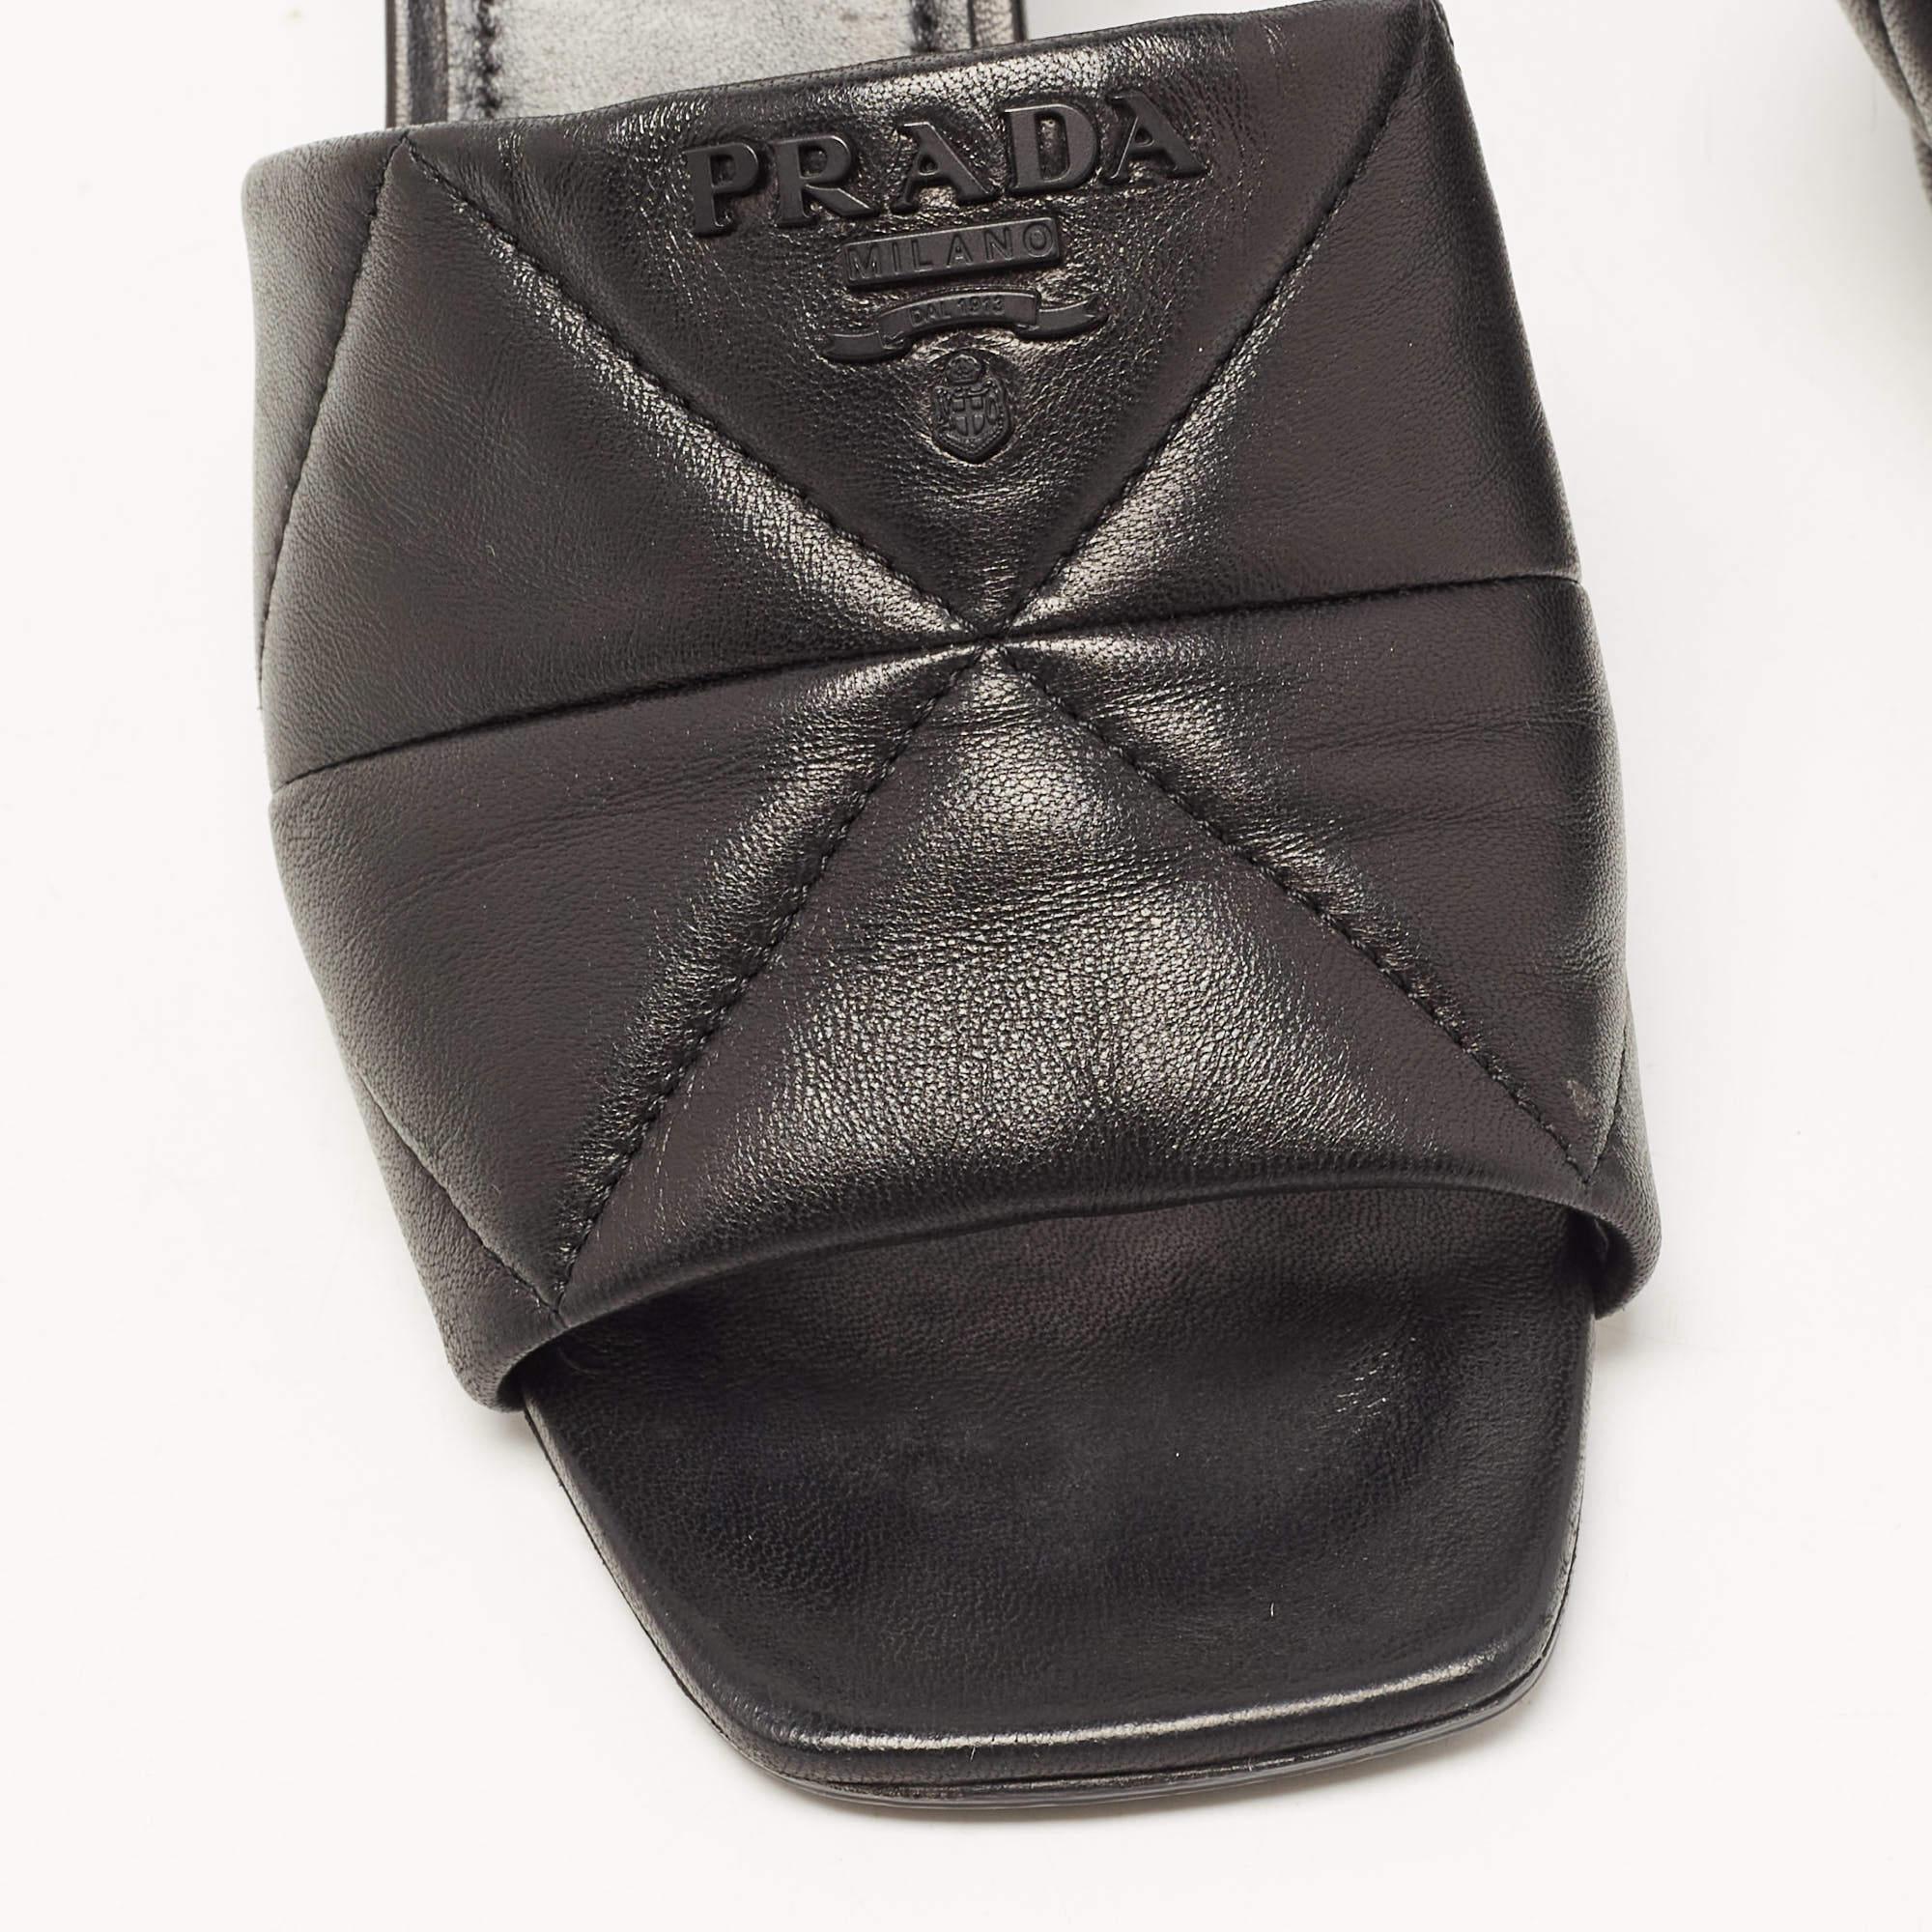 Prada Black Quilted Leather Slide Sandals Size 39 3